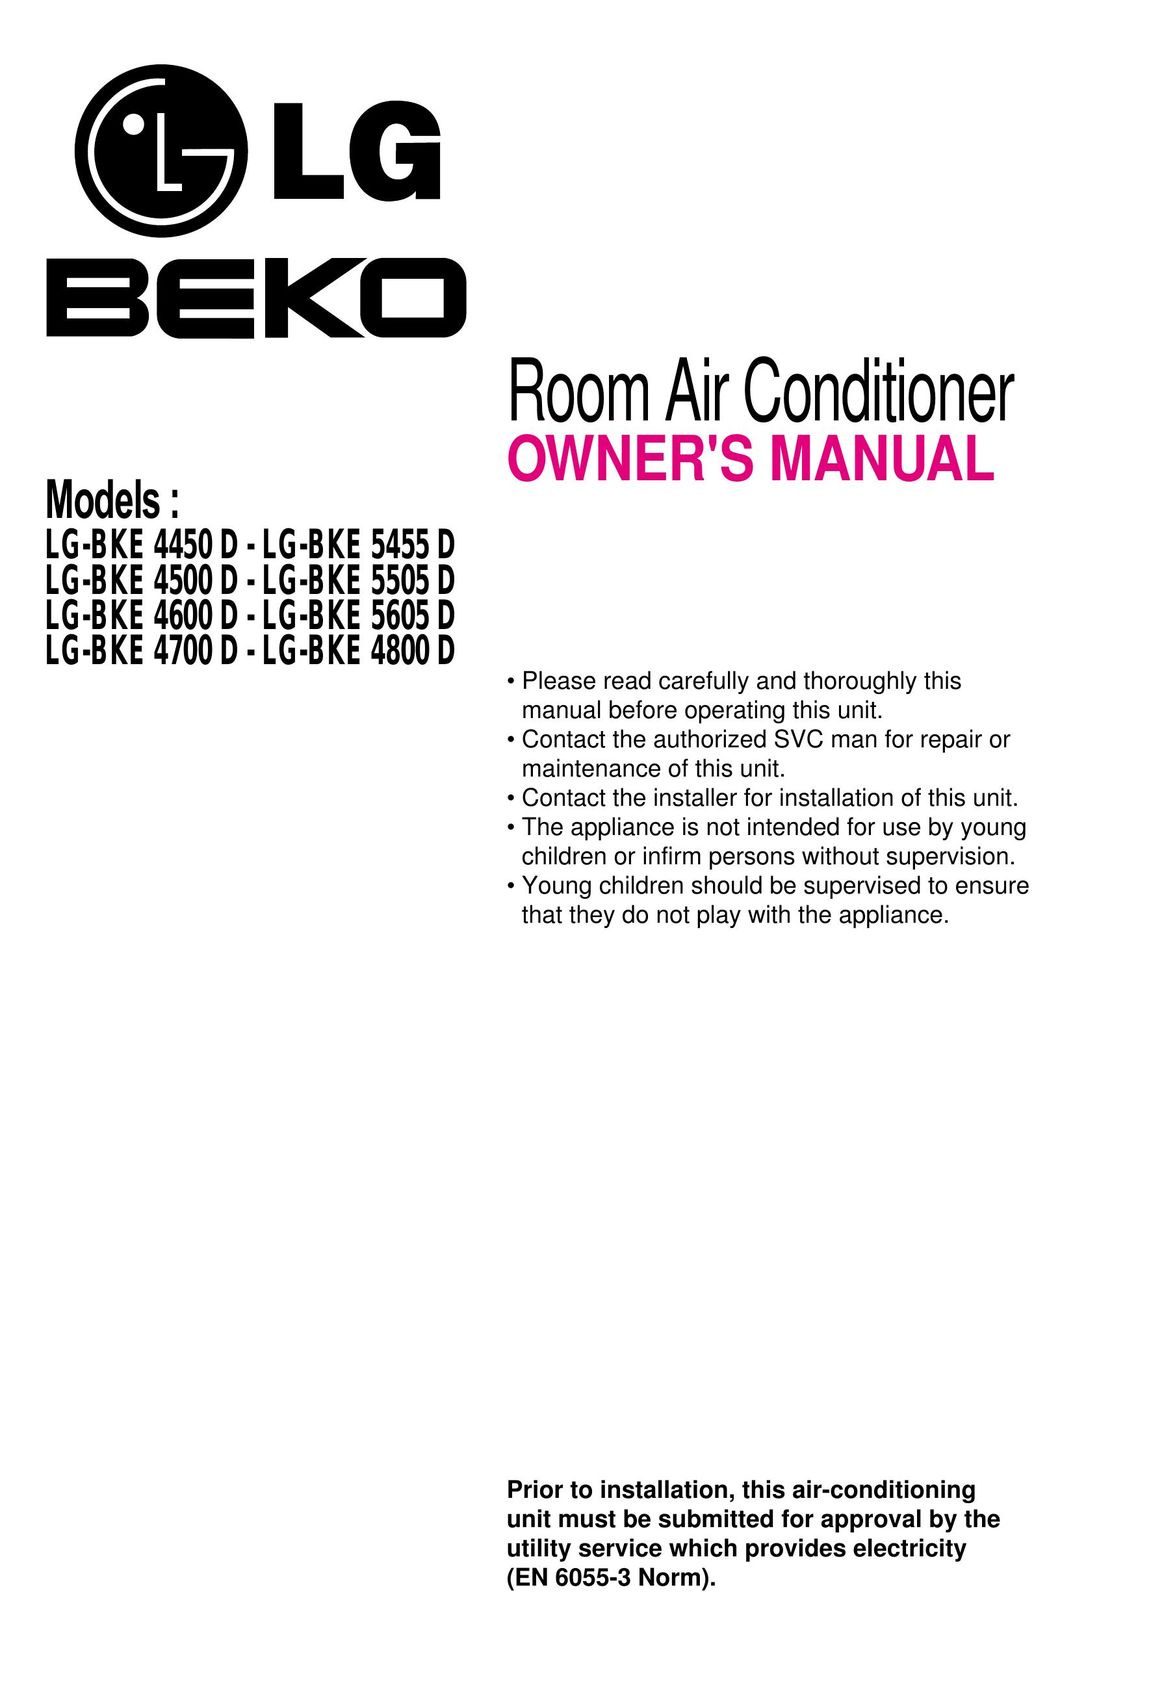 Beko LG-BKE 4450 D, LG-BKE 5455 D, LG-BKE 4500 D, LG-BKE 5505 D, LG-BKE 4600 D, LG-BKE 5605 D, LG-BKE 4700 D, LG-BKE 4800 D Air Conditioner User Manual